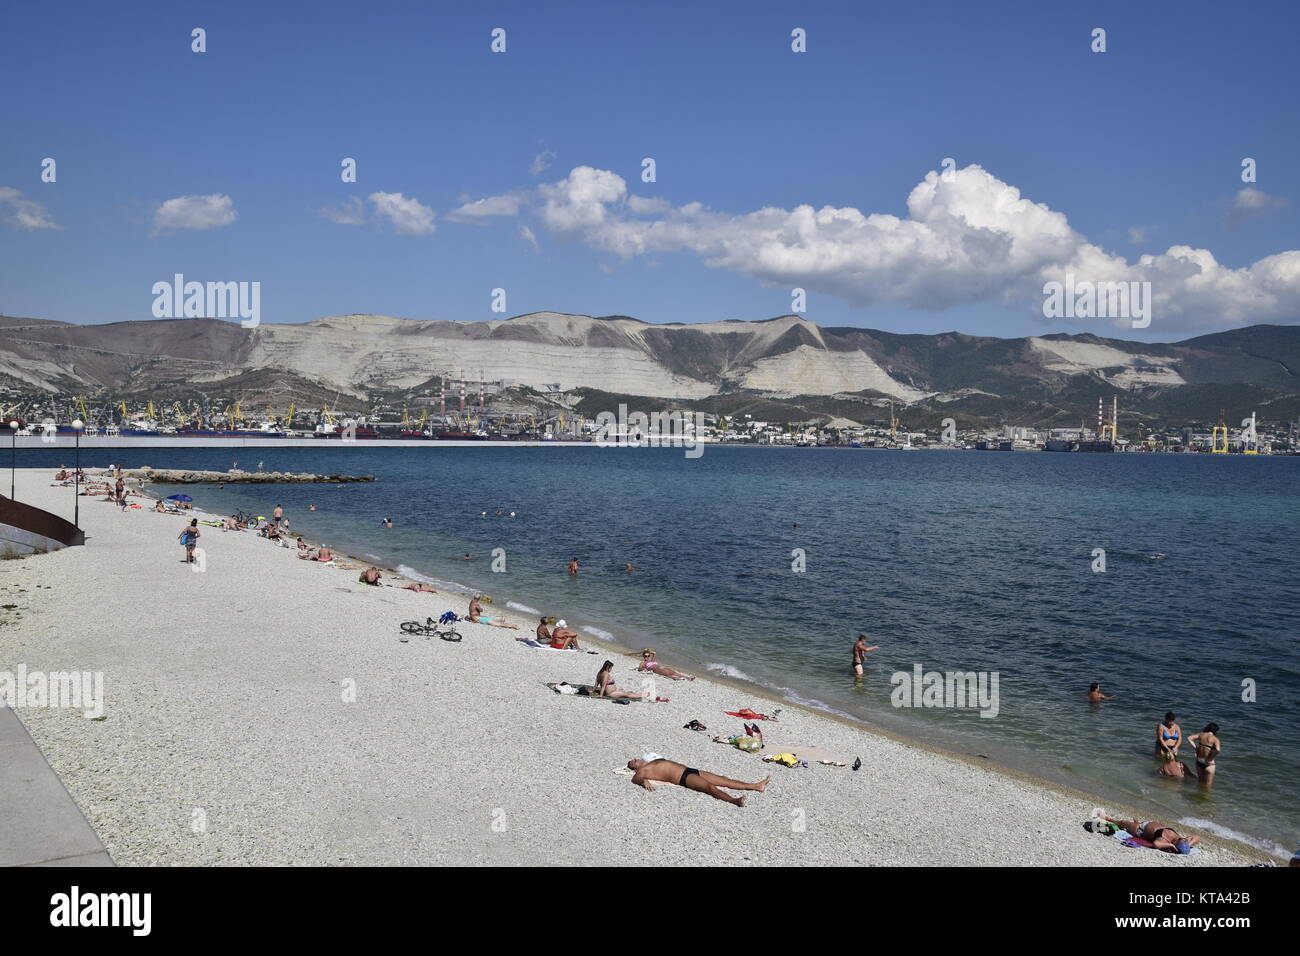 City beach town of Novorossiysk. Cargo port with port cranes. Sea bay and mountainous coast. Stock Photo